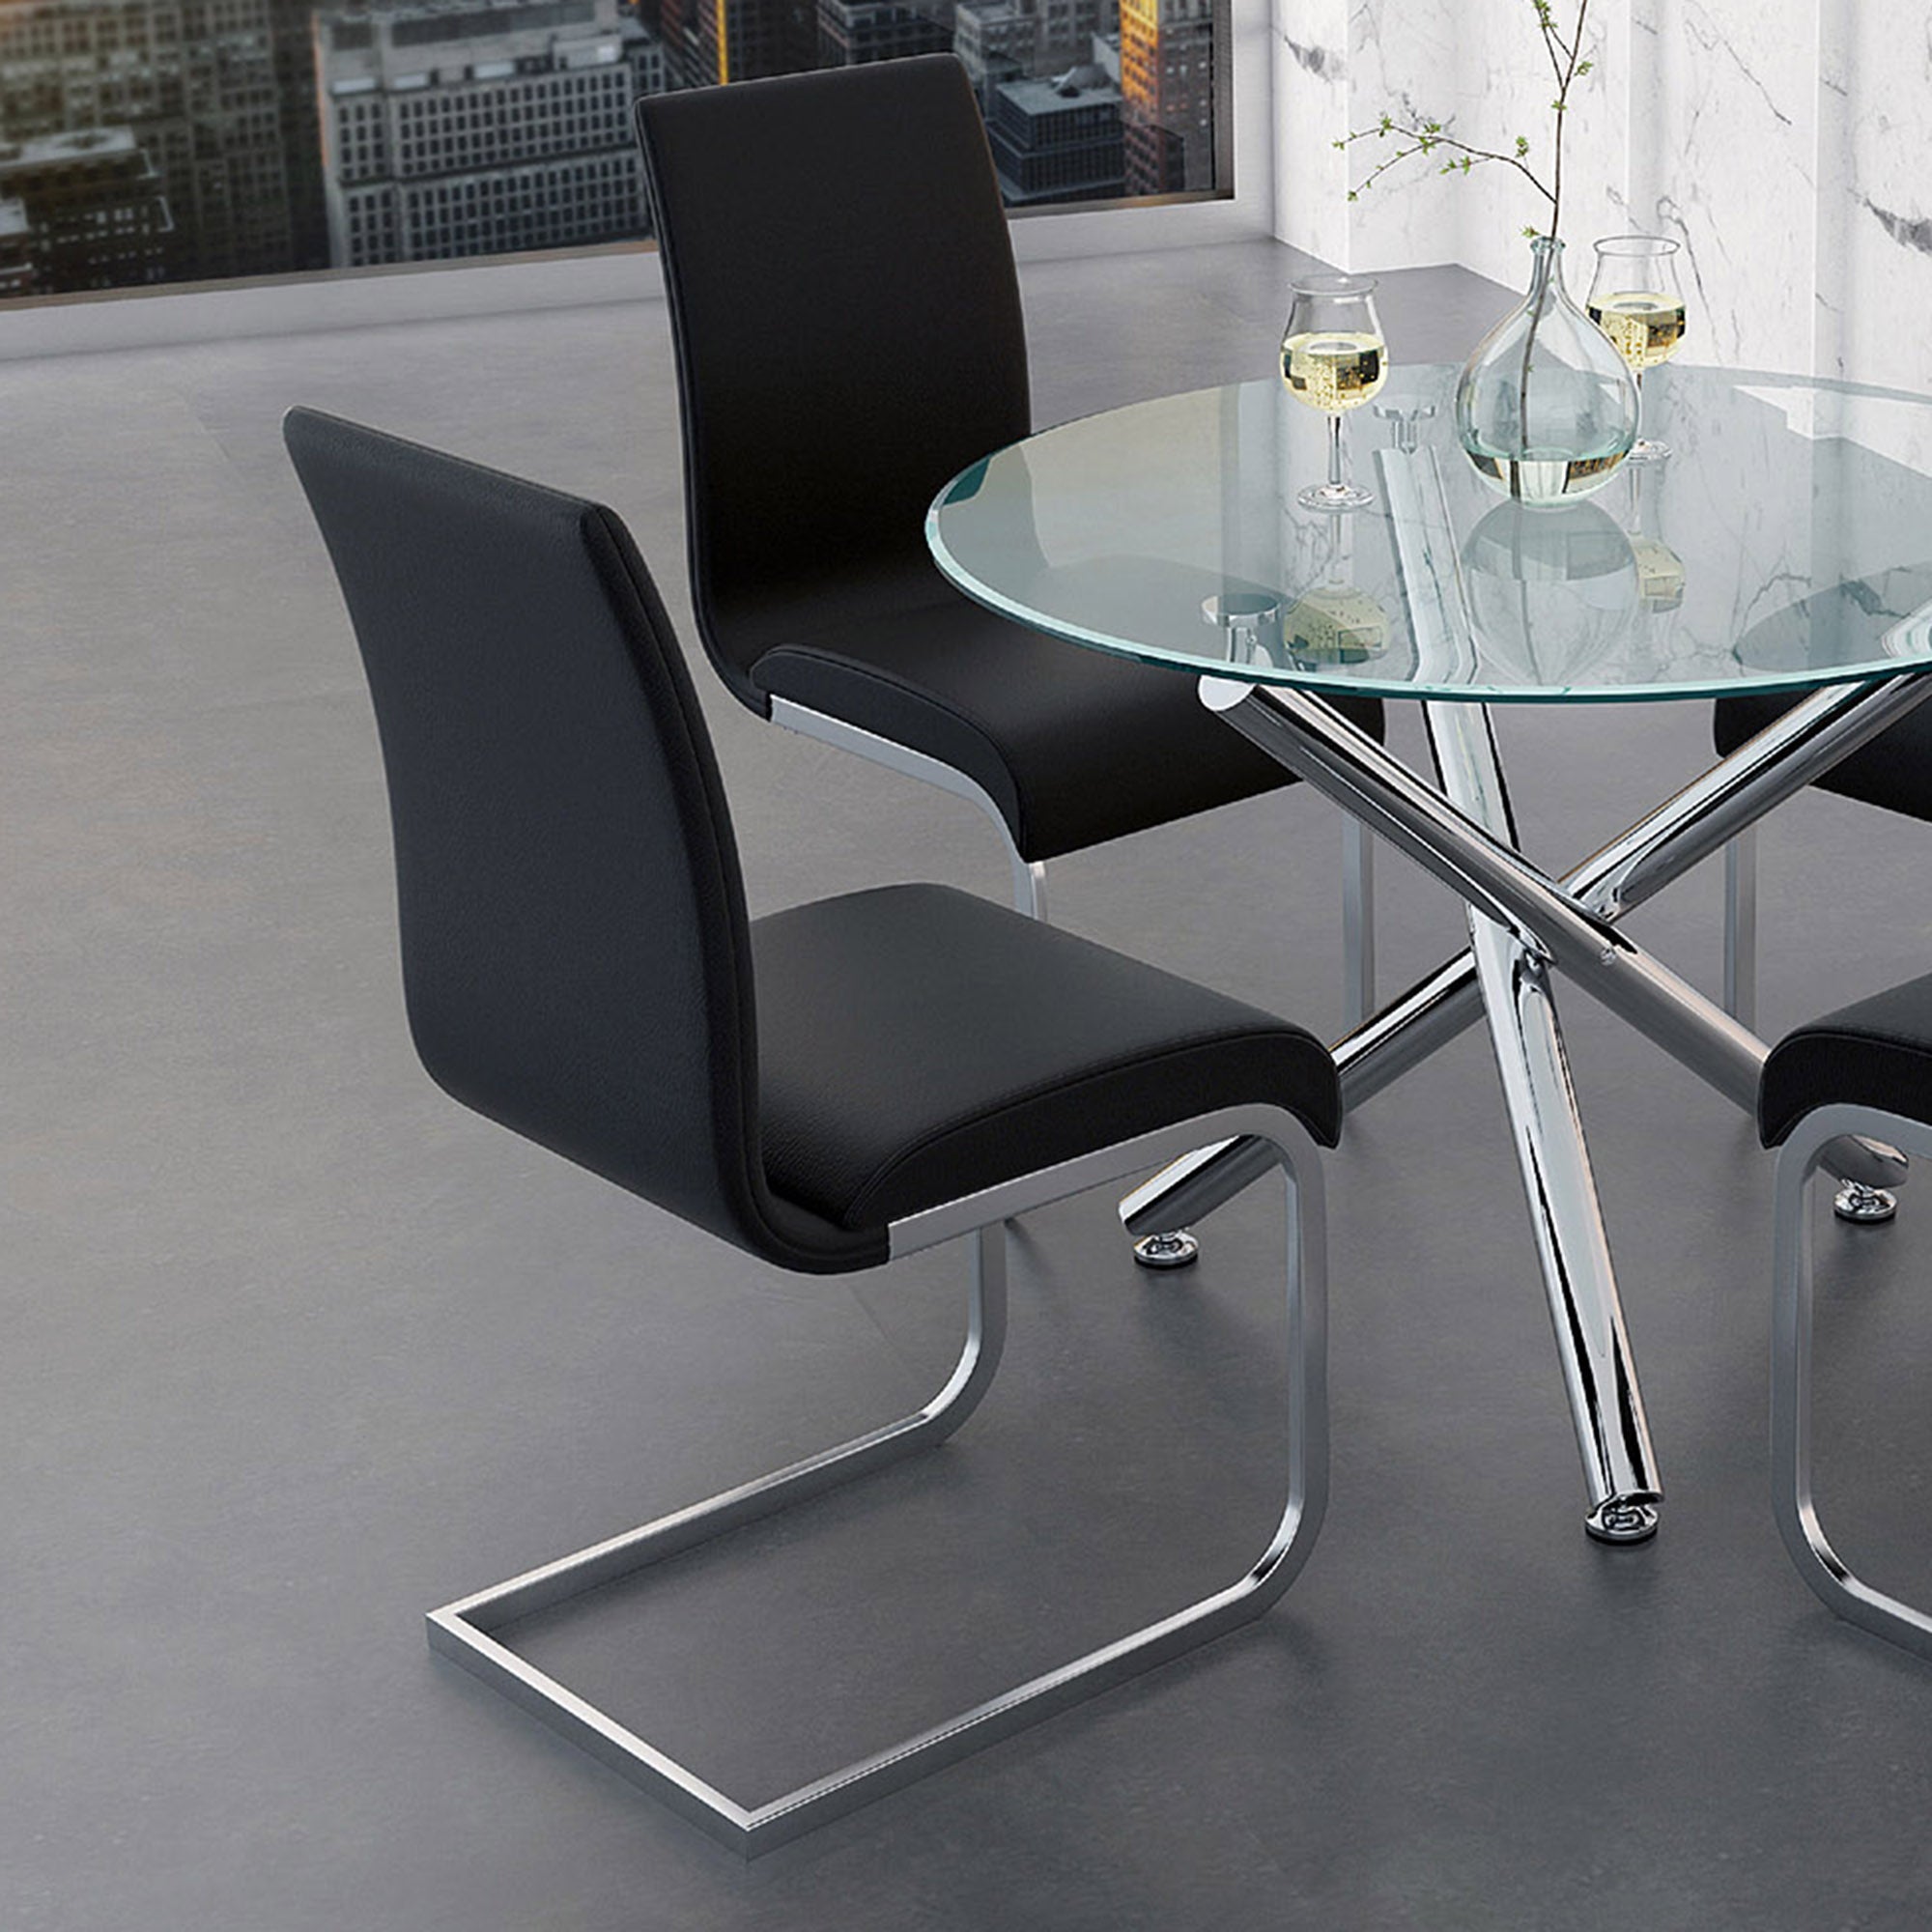 SOLARA II-DINING TABLE, 40"DIA - CHROME / MAXIM BLACK CHAIRS - 5PC DINING SET